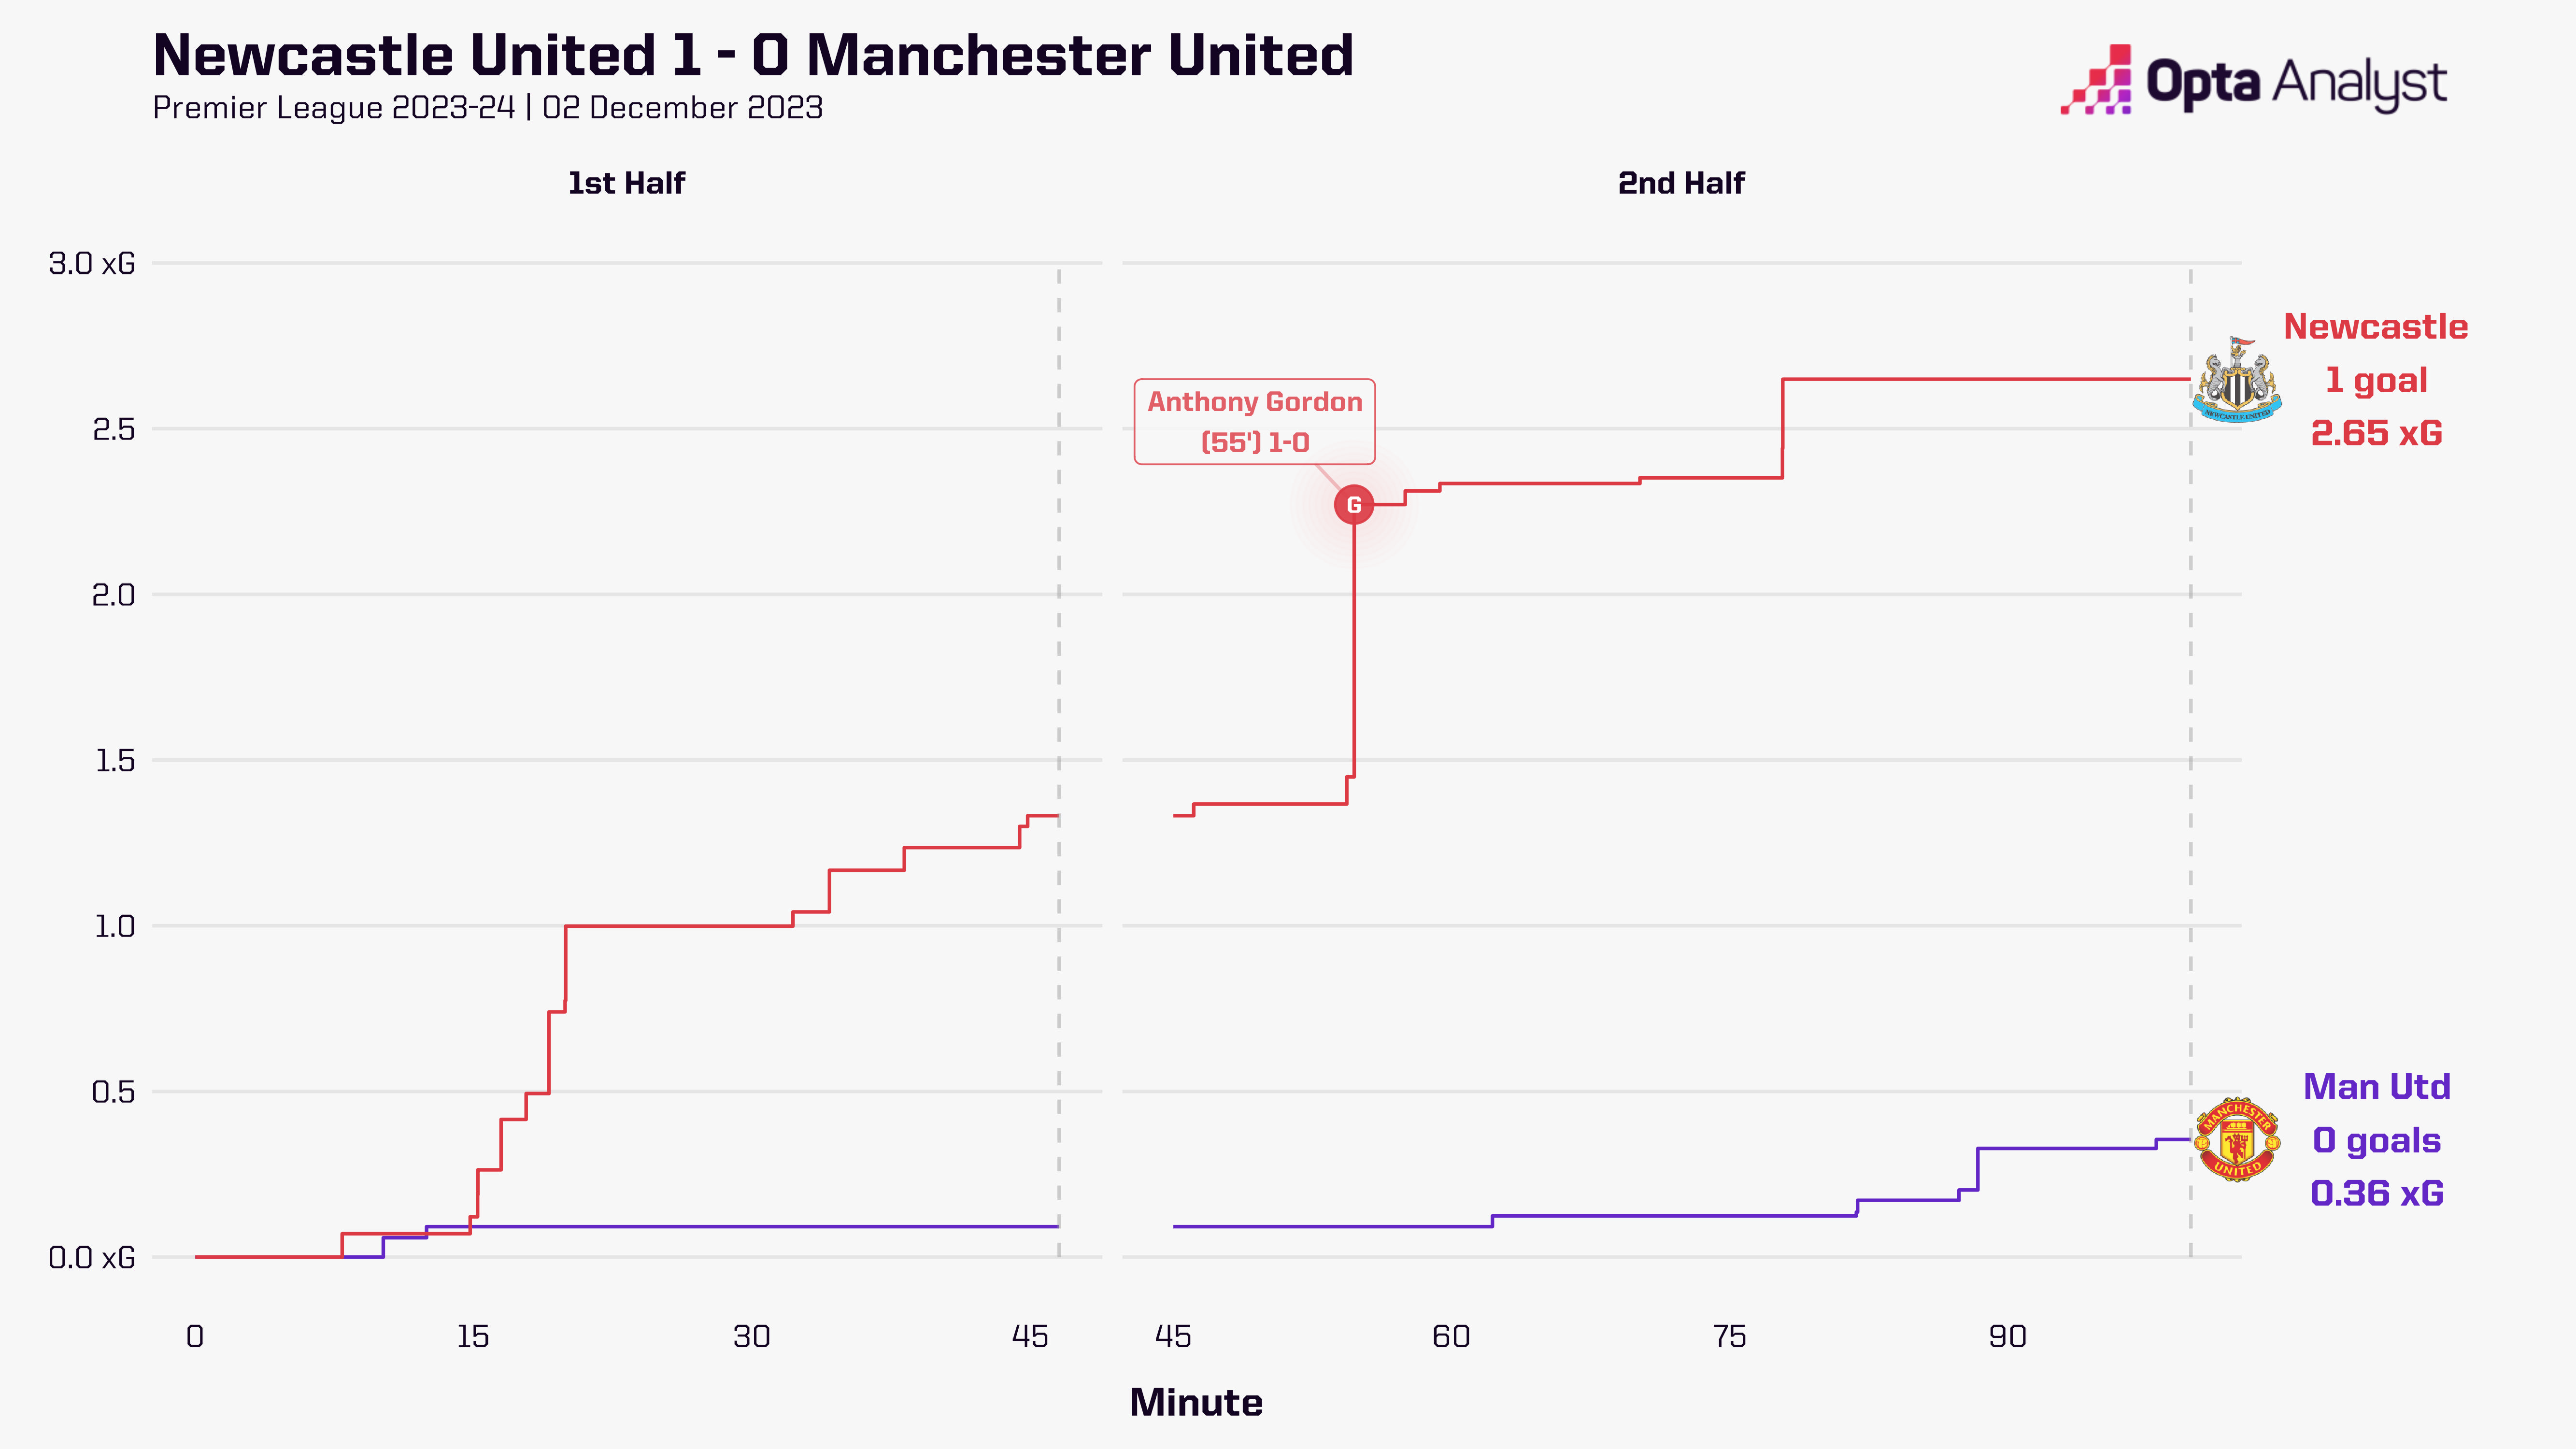 Newcastle 1-0 Manchester United Timeline